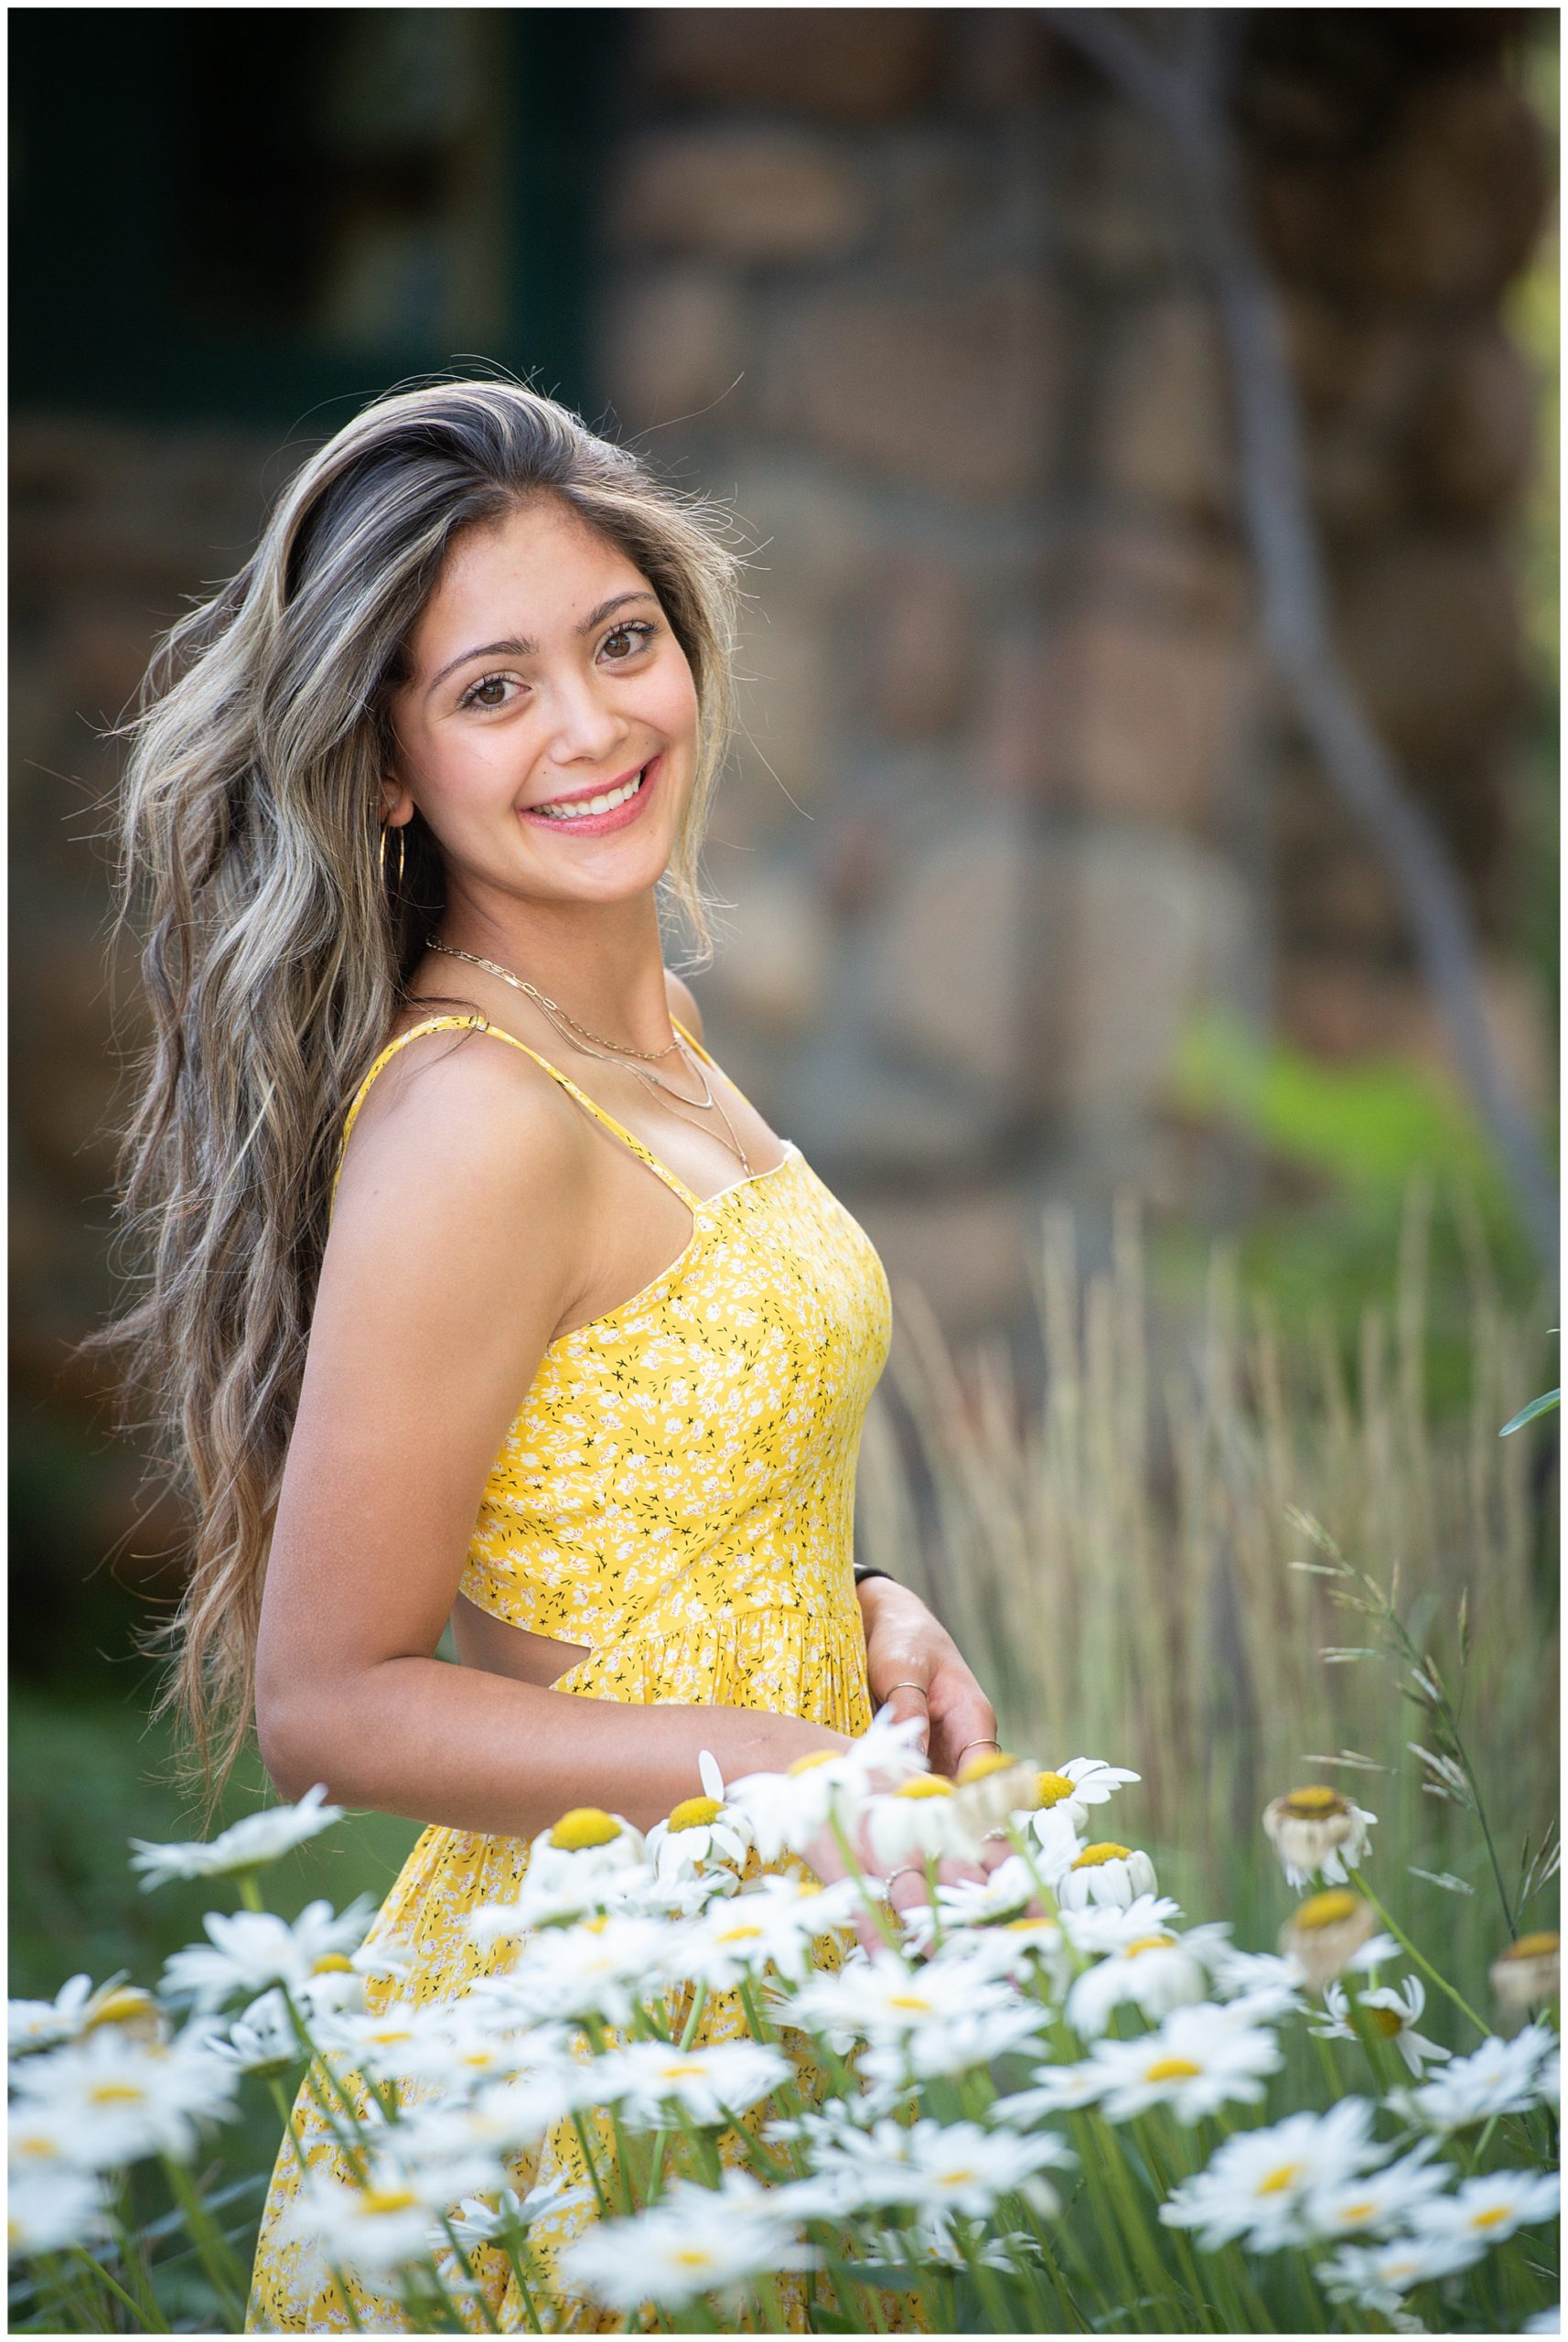 A high school senior wears a spaghetti strap yellow dress in a field of white wildflowers